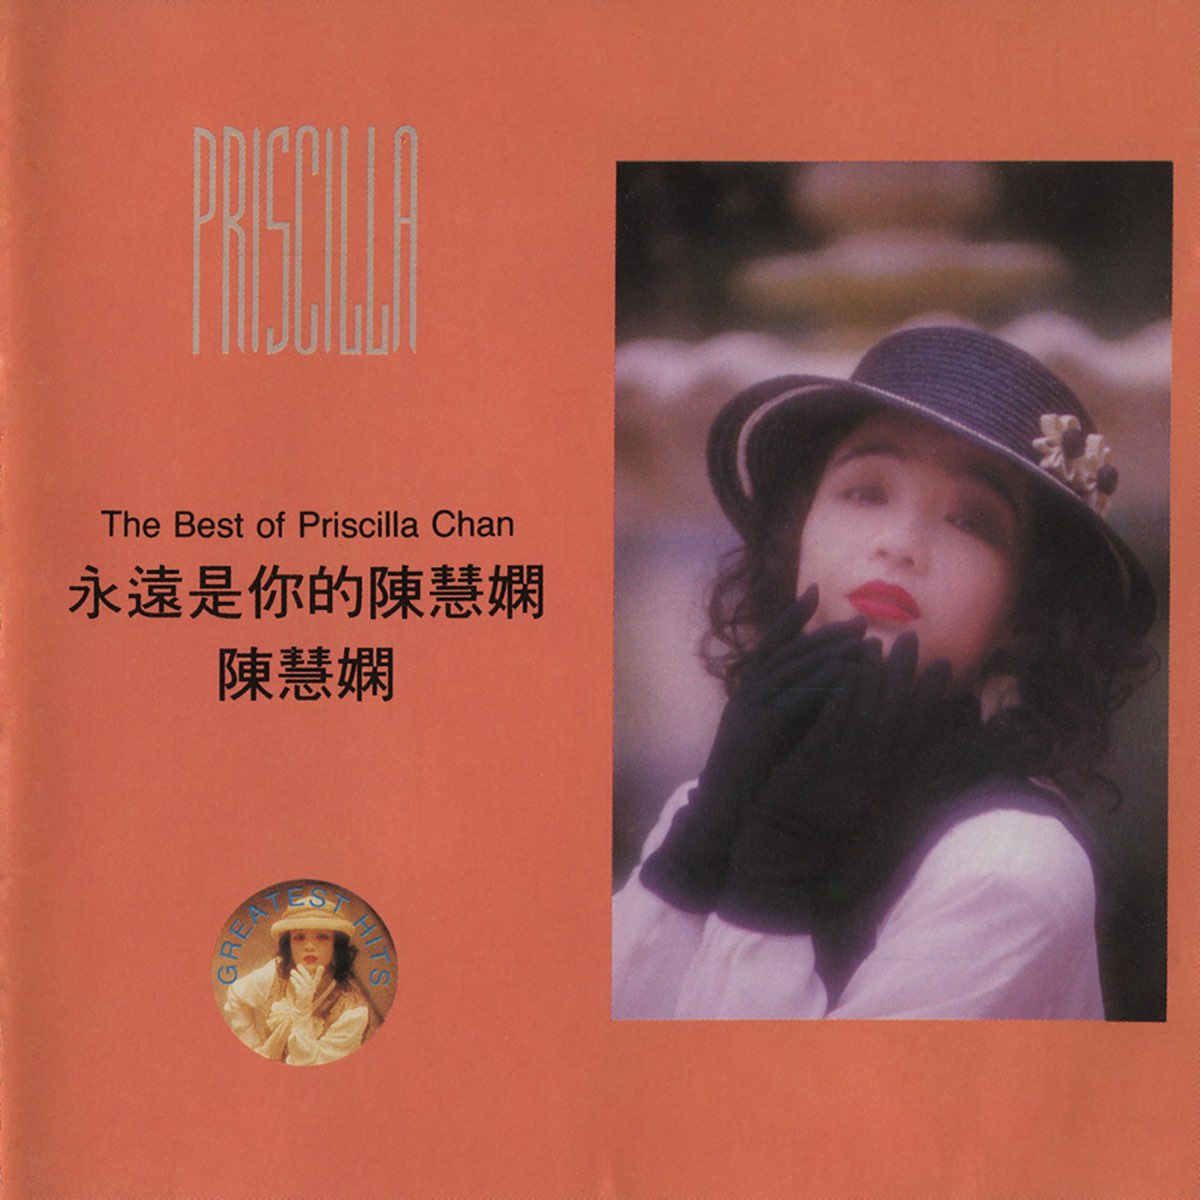 永遠是你的陳慧嫻- Album by Priscilla Chan - Apple Music